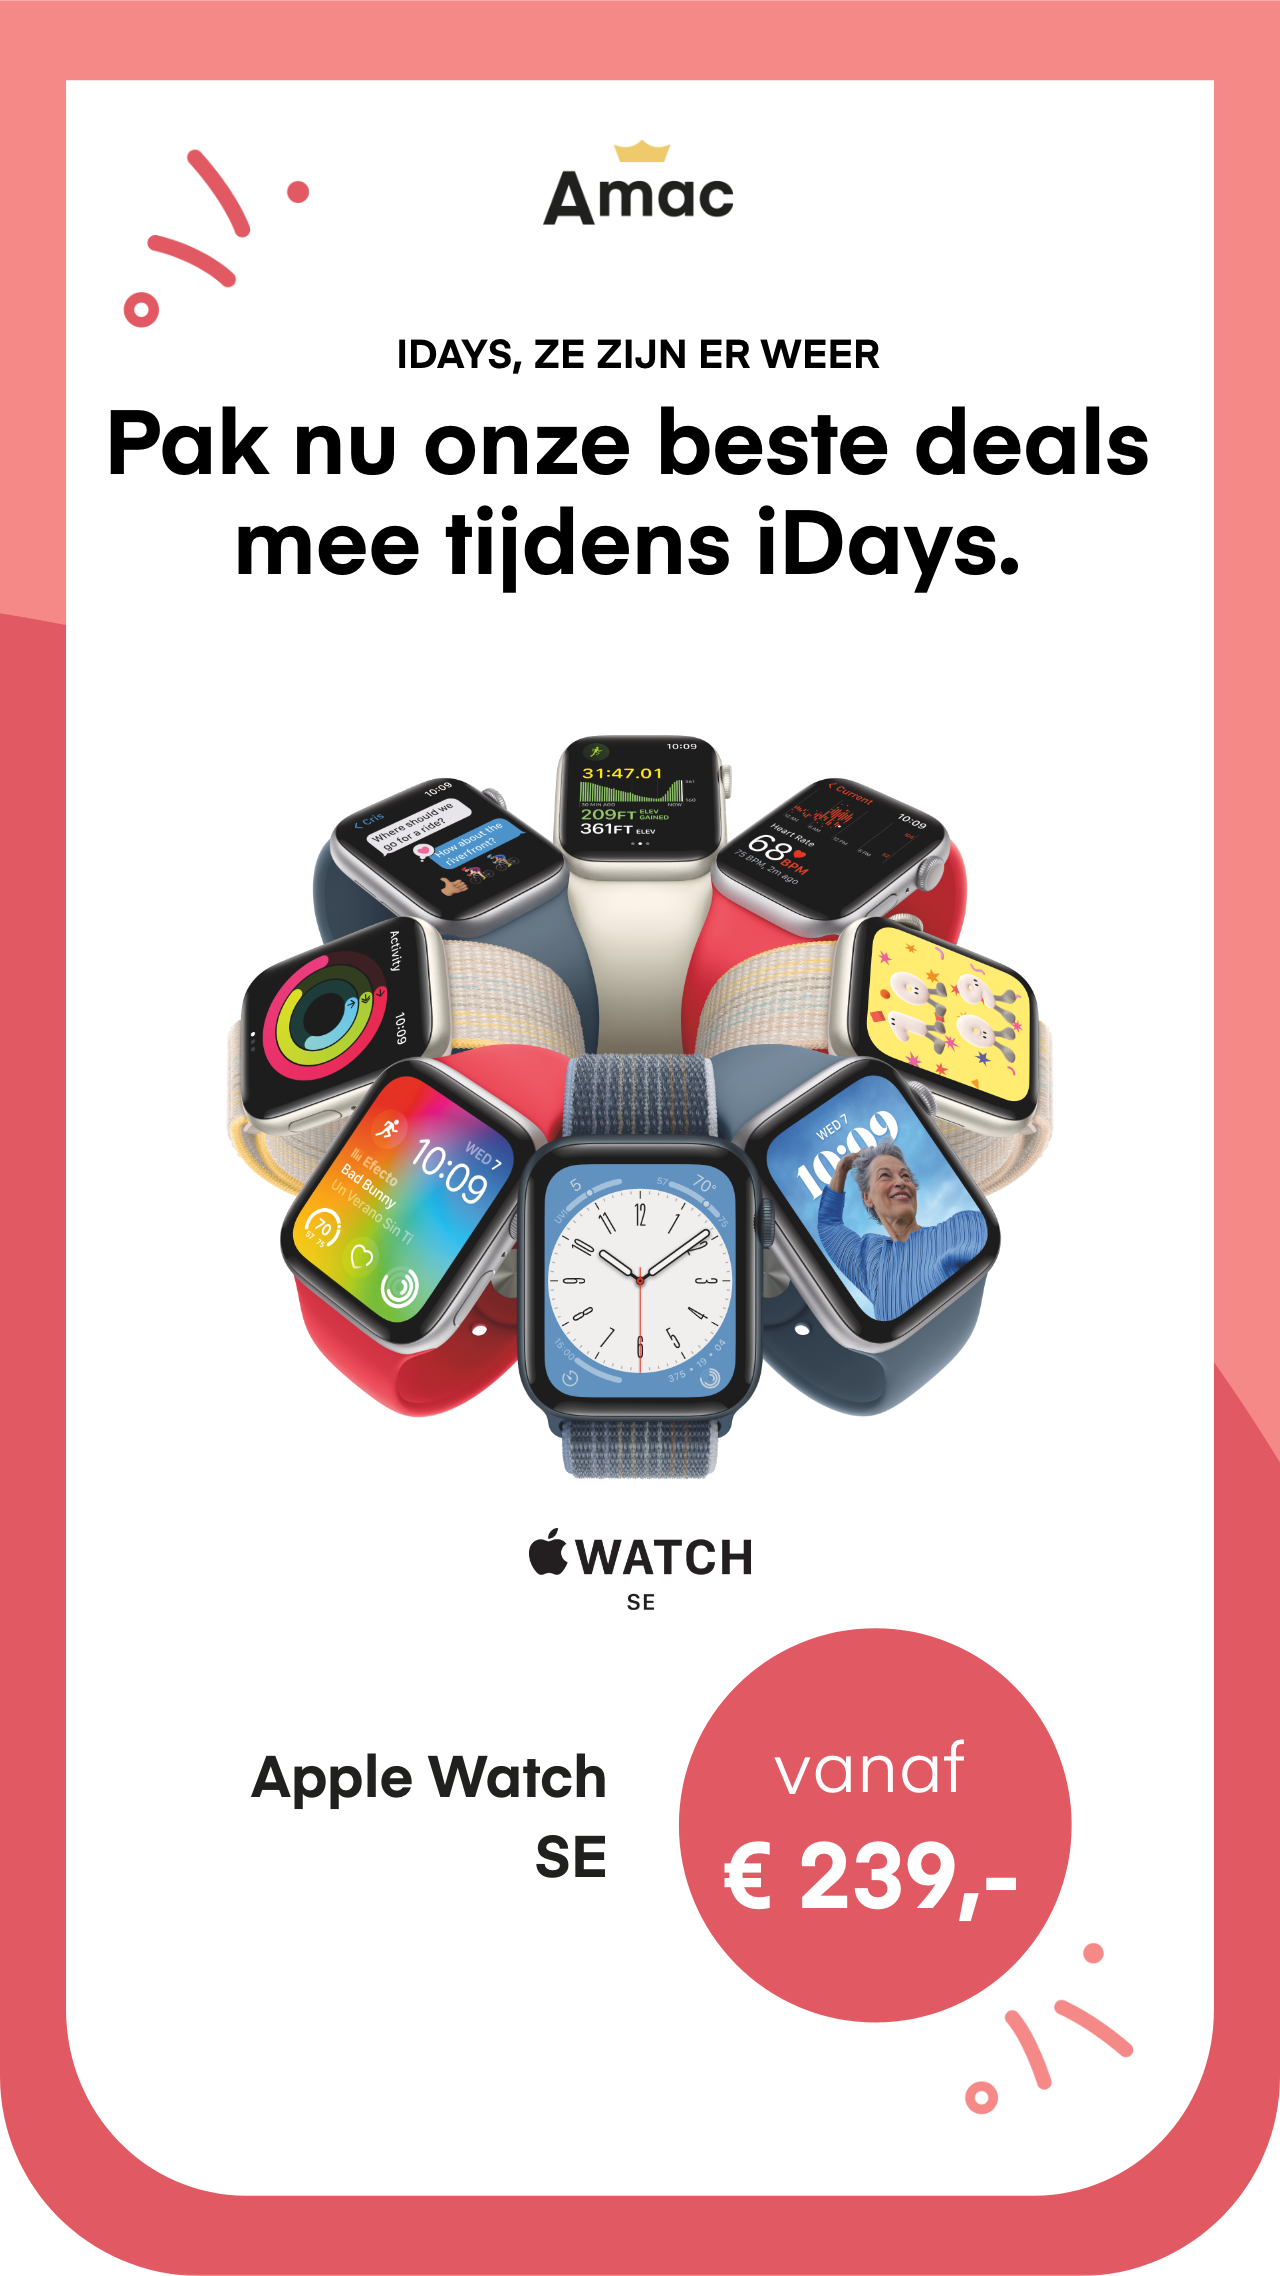 Apple Watch SE deals iDays